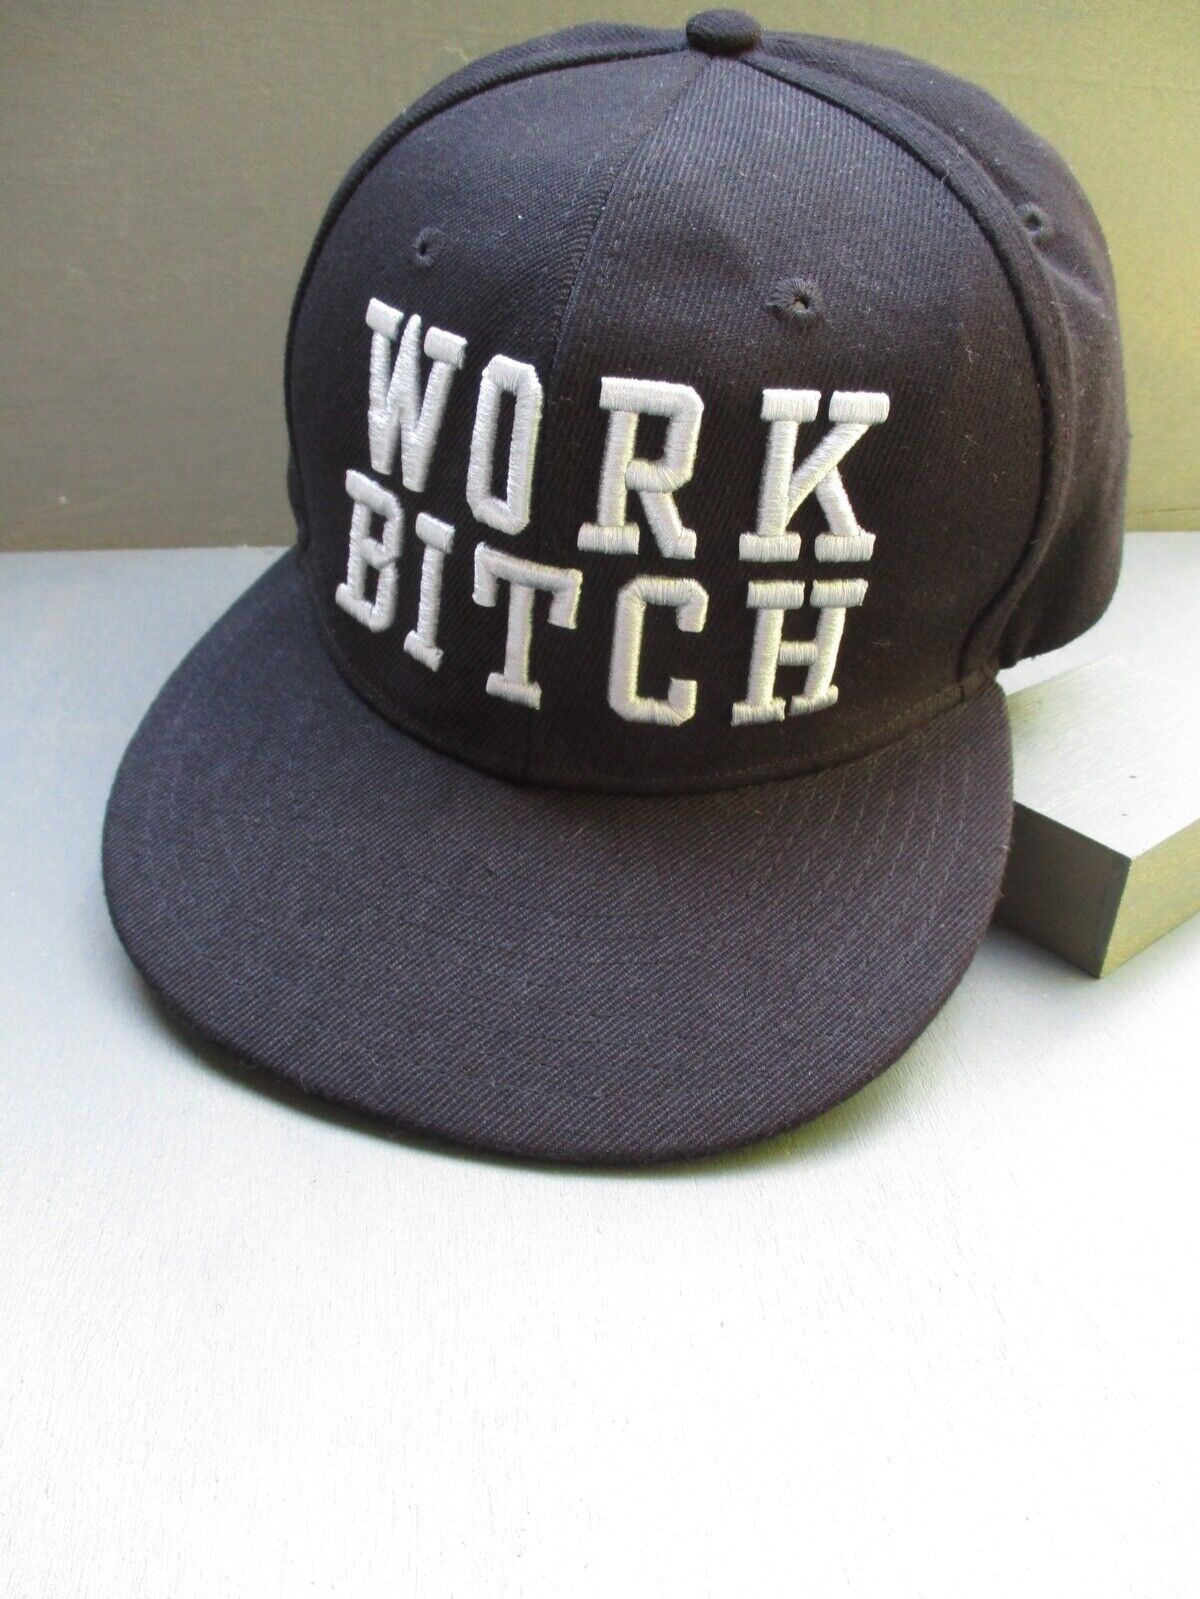 Britney Spears Work Bitch Authentic Las Vegas Black Baseball Snapback Cap Hat